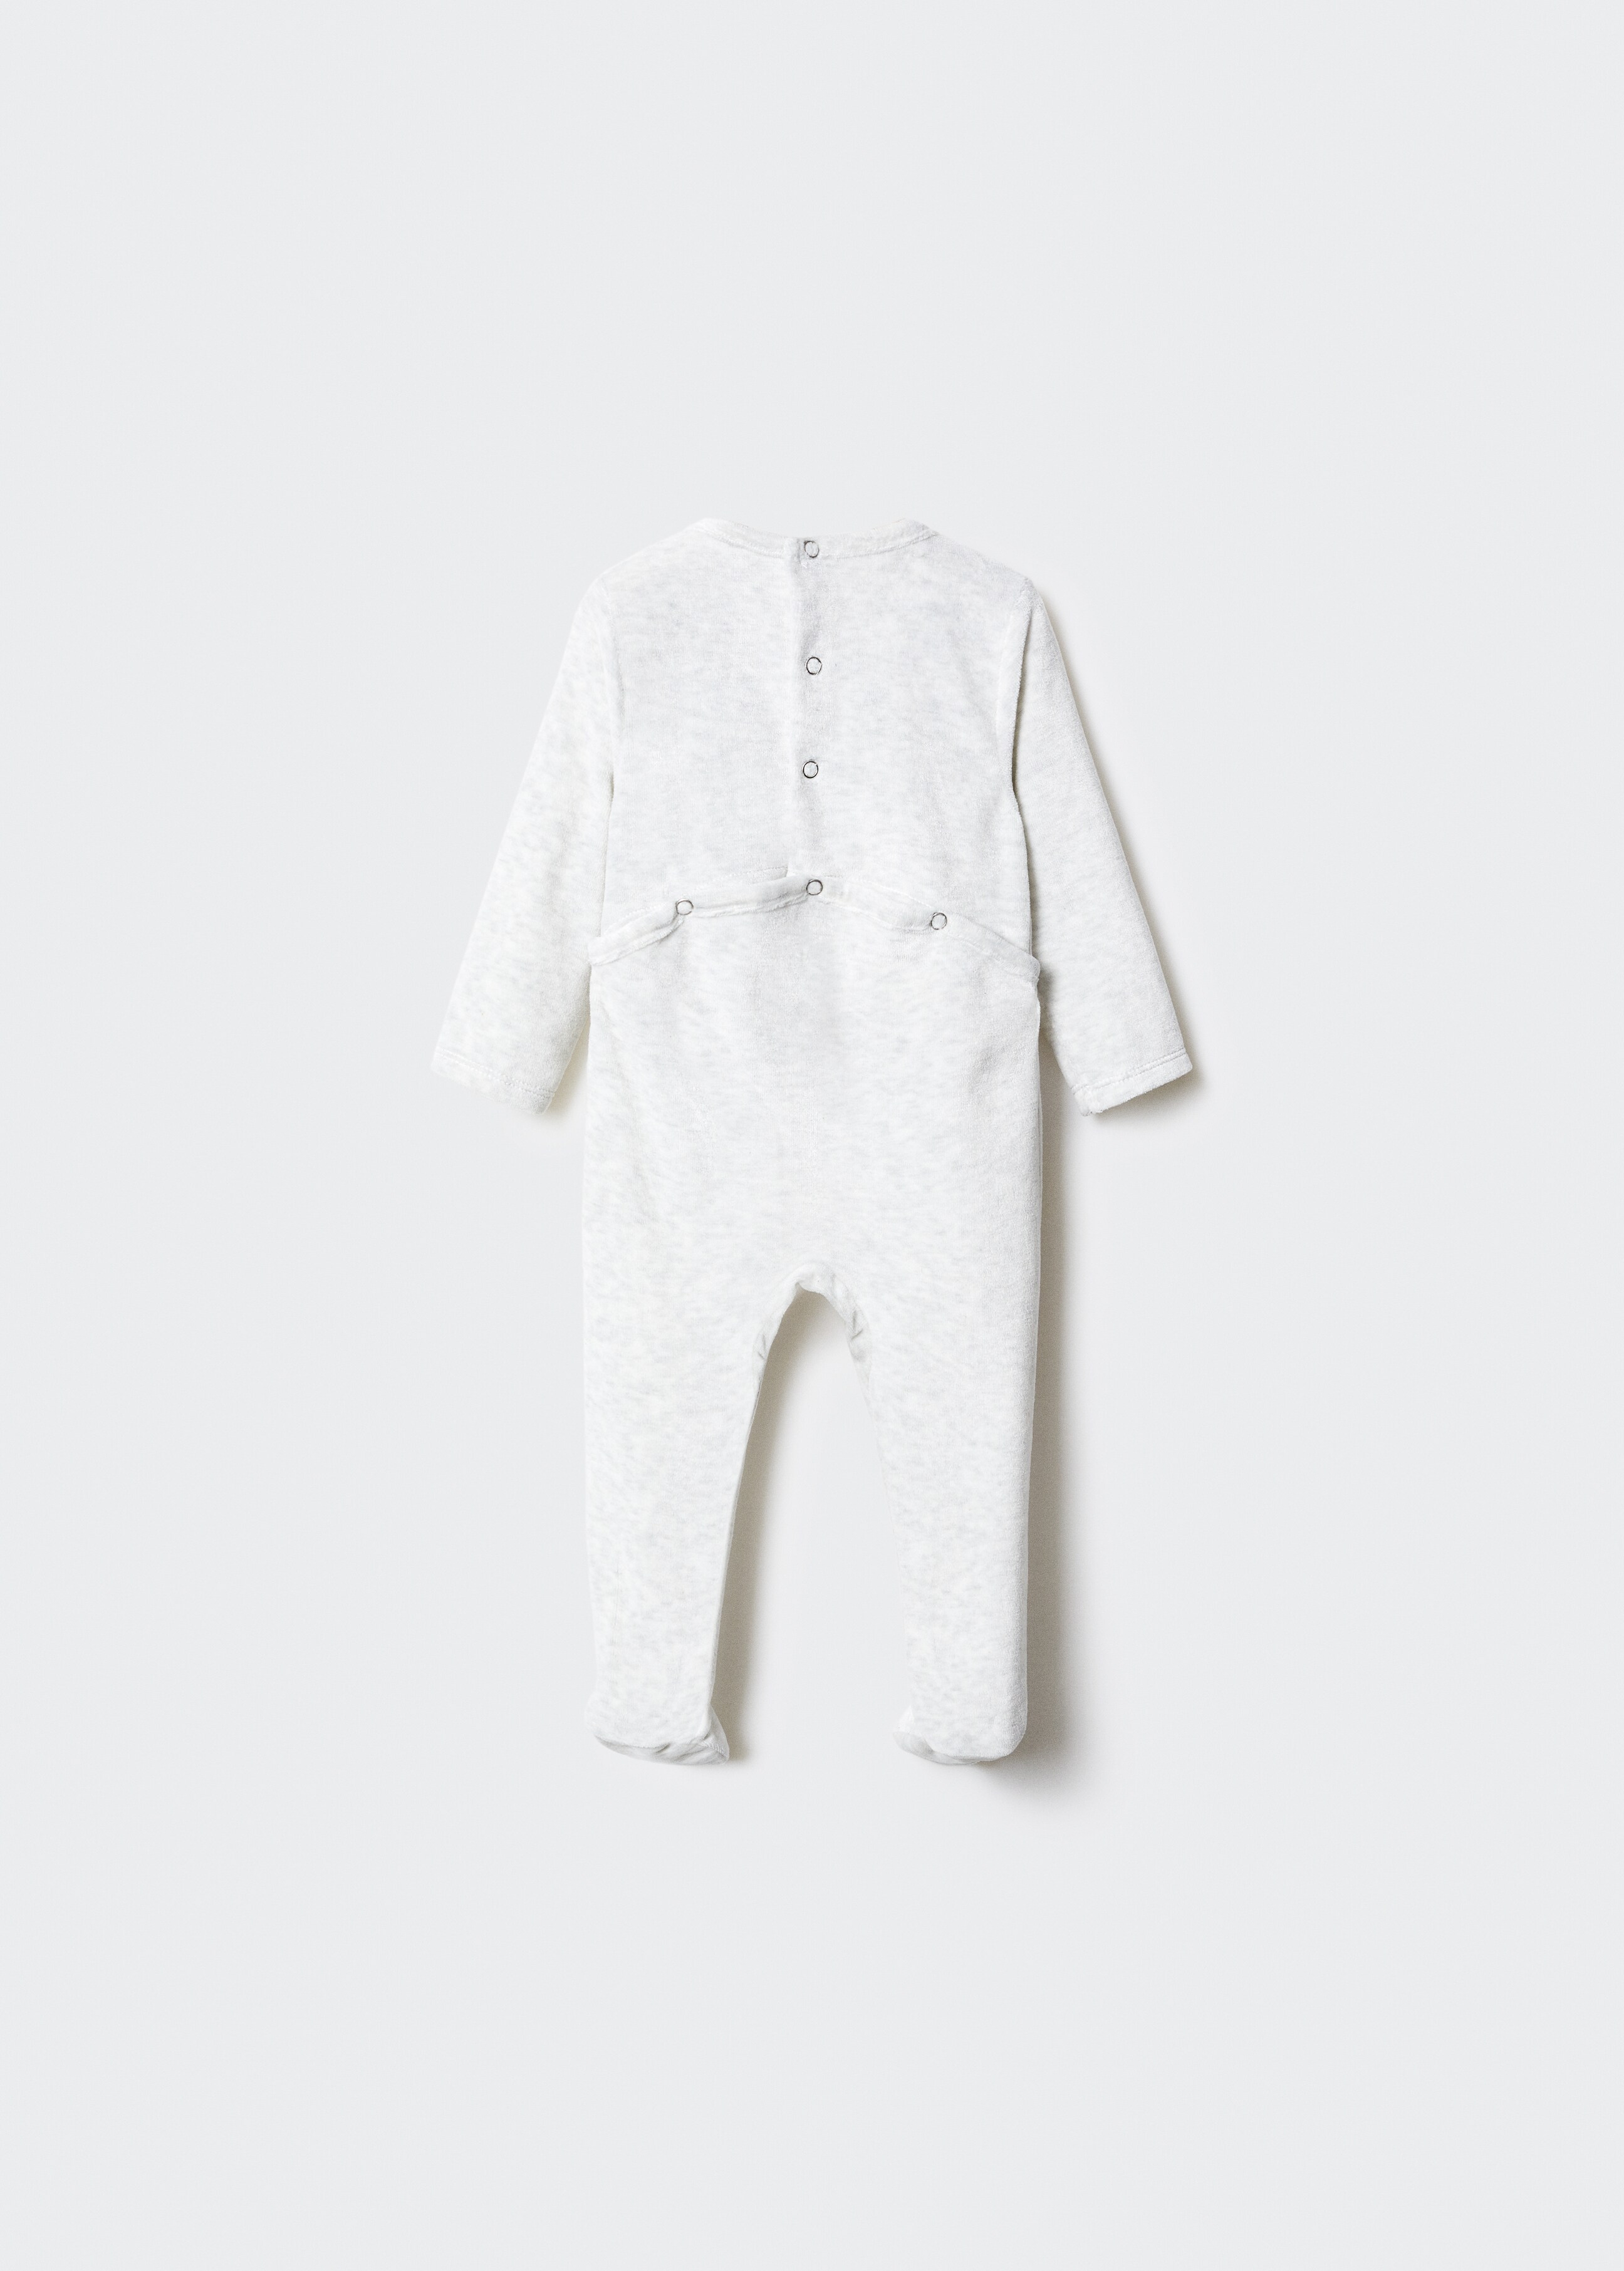 Cotton body pyjamas - Reverse of the article